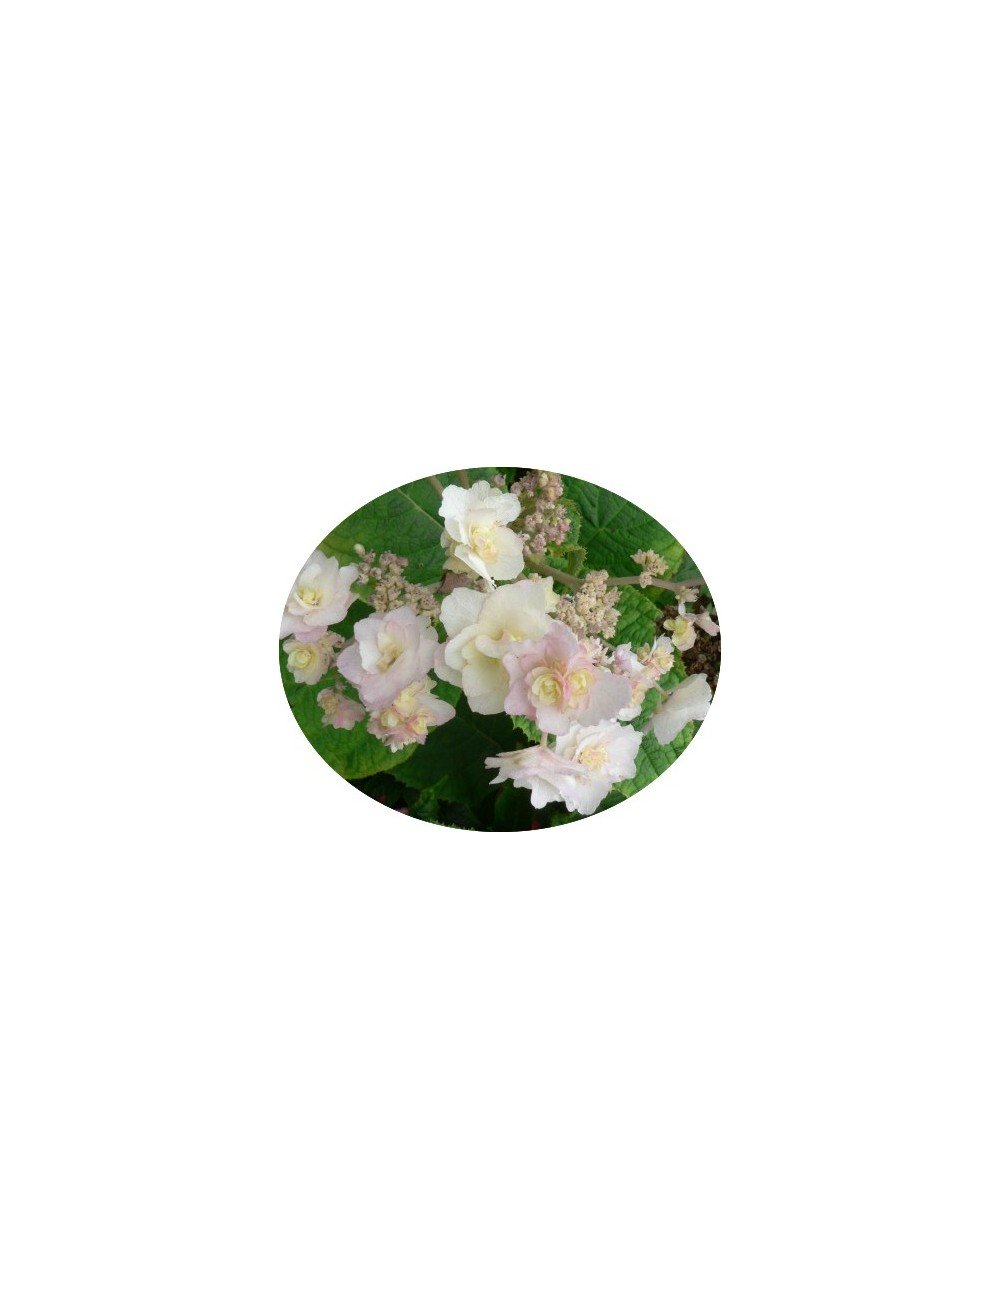 Hydrangea Involucrata Hortensis